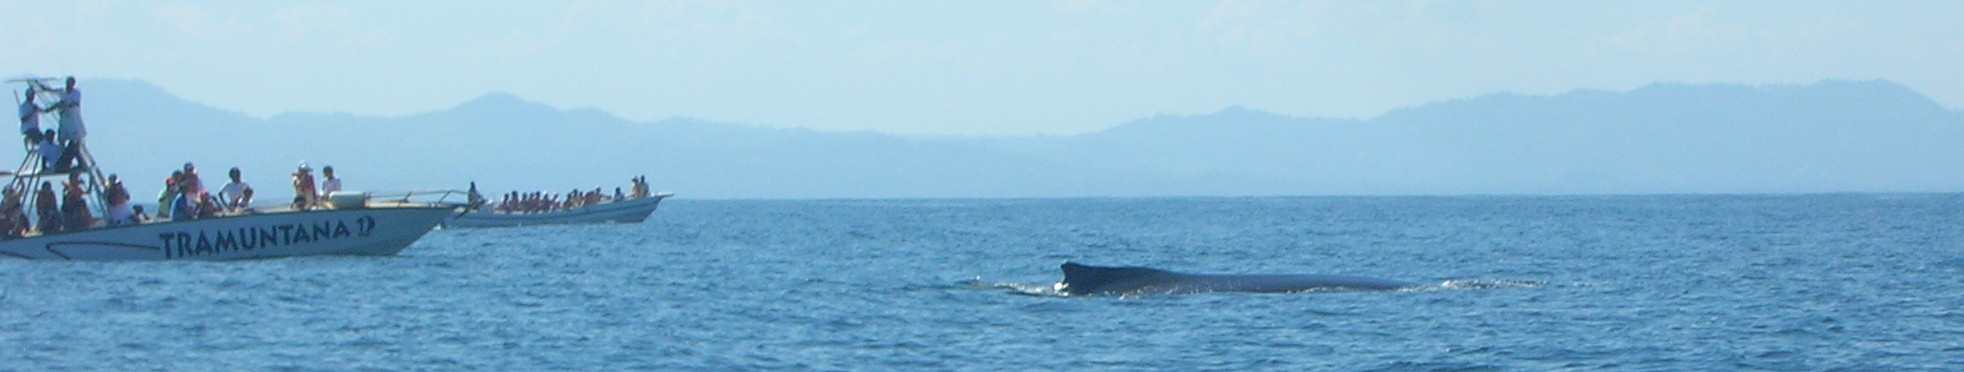 balena e mave di avvistamento baia di samanà